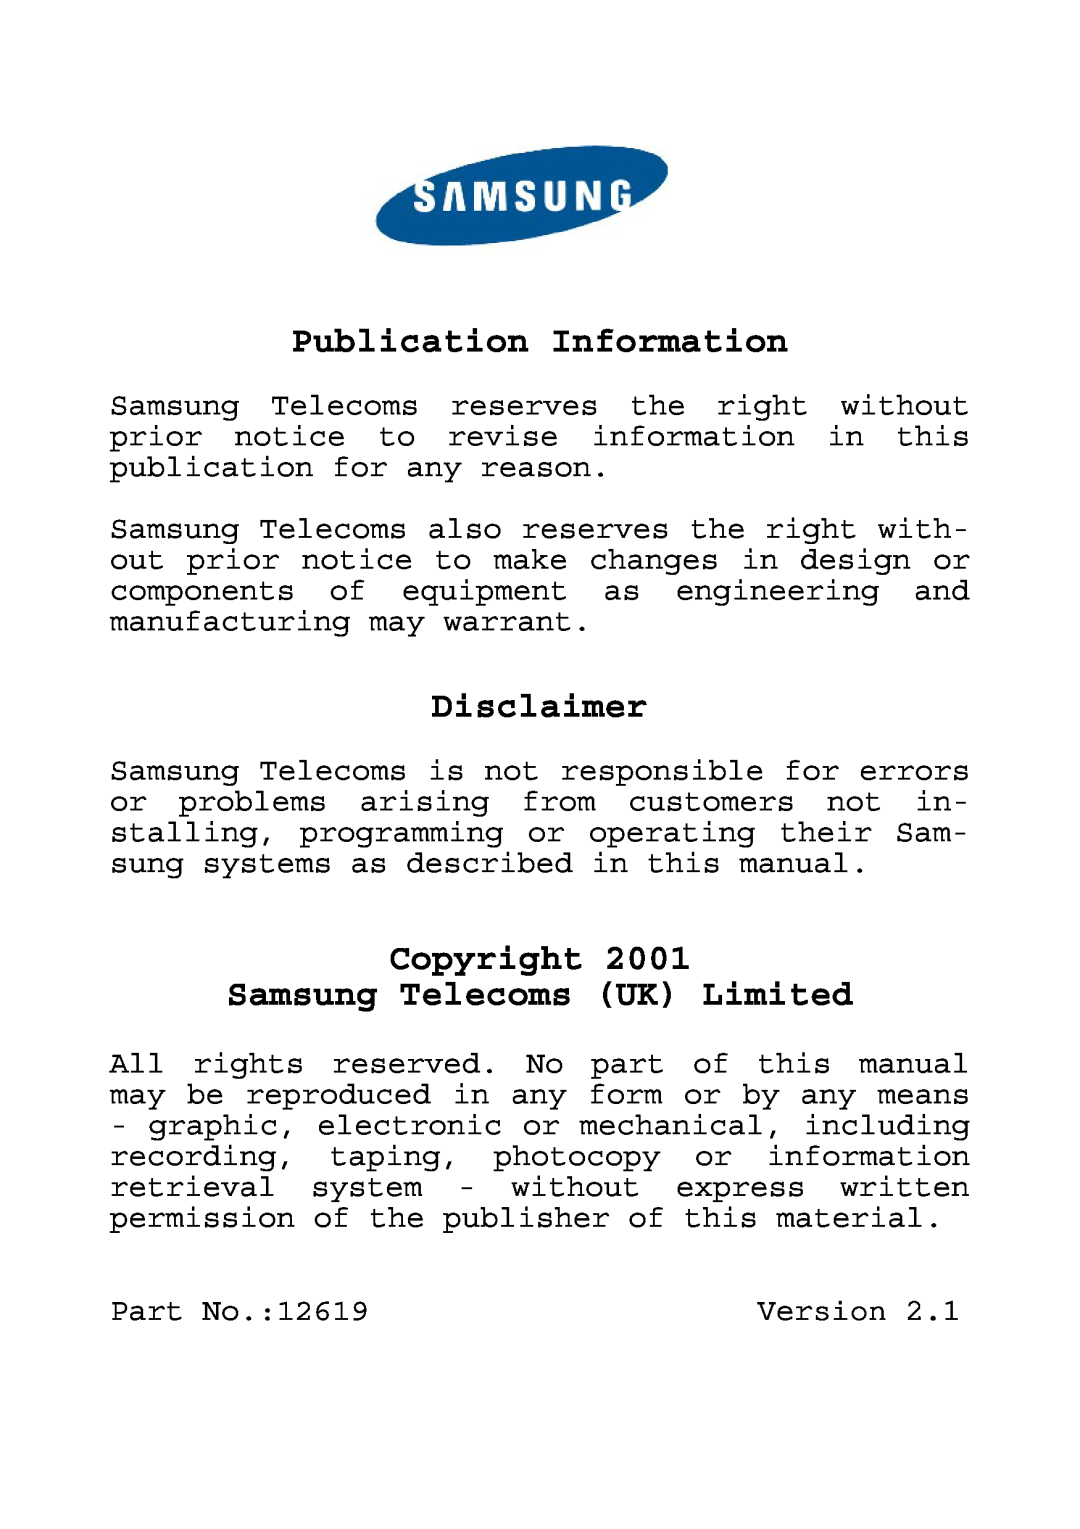 Samsung DCS KEYSET manual Publication Information, Disclaimer, Copyright Samsung Telecoms UK Limited 